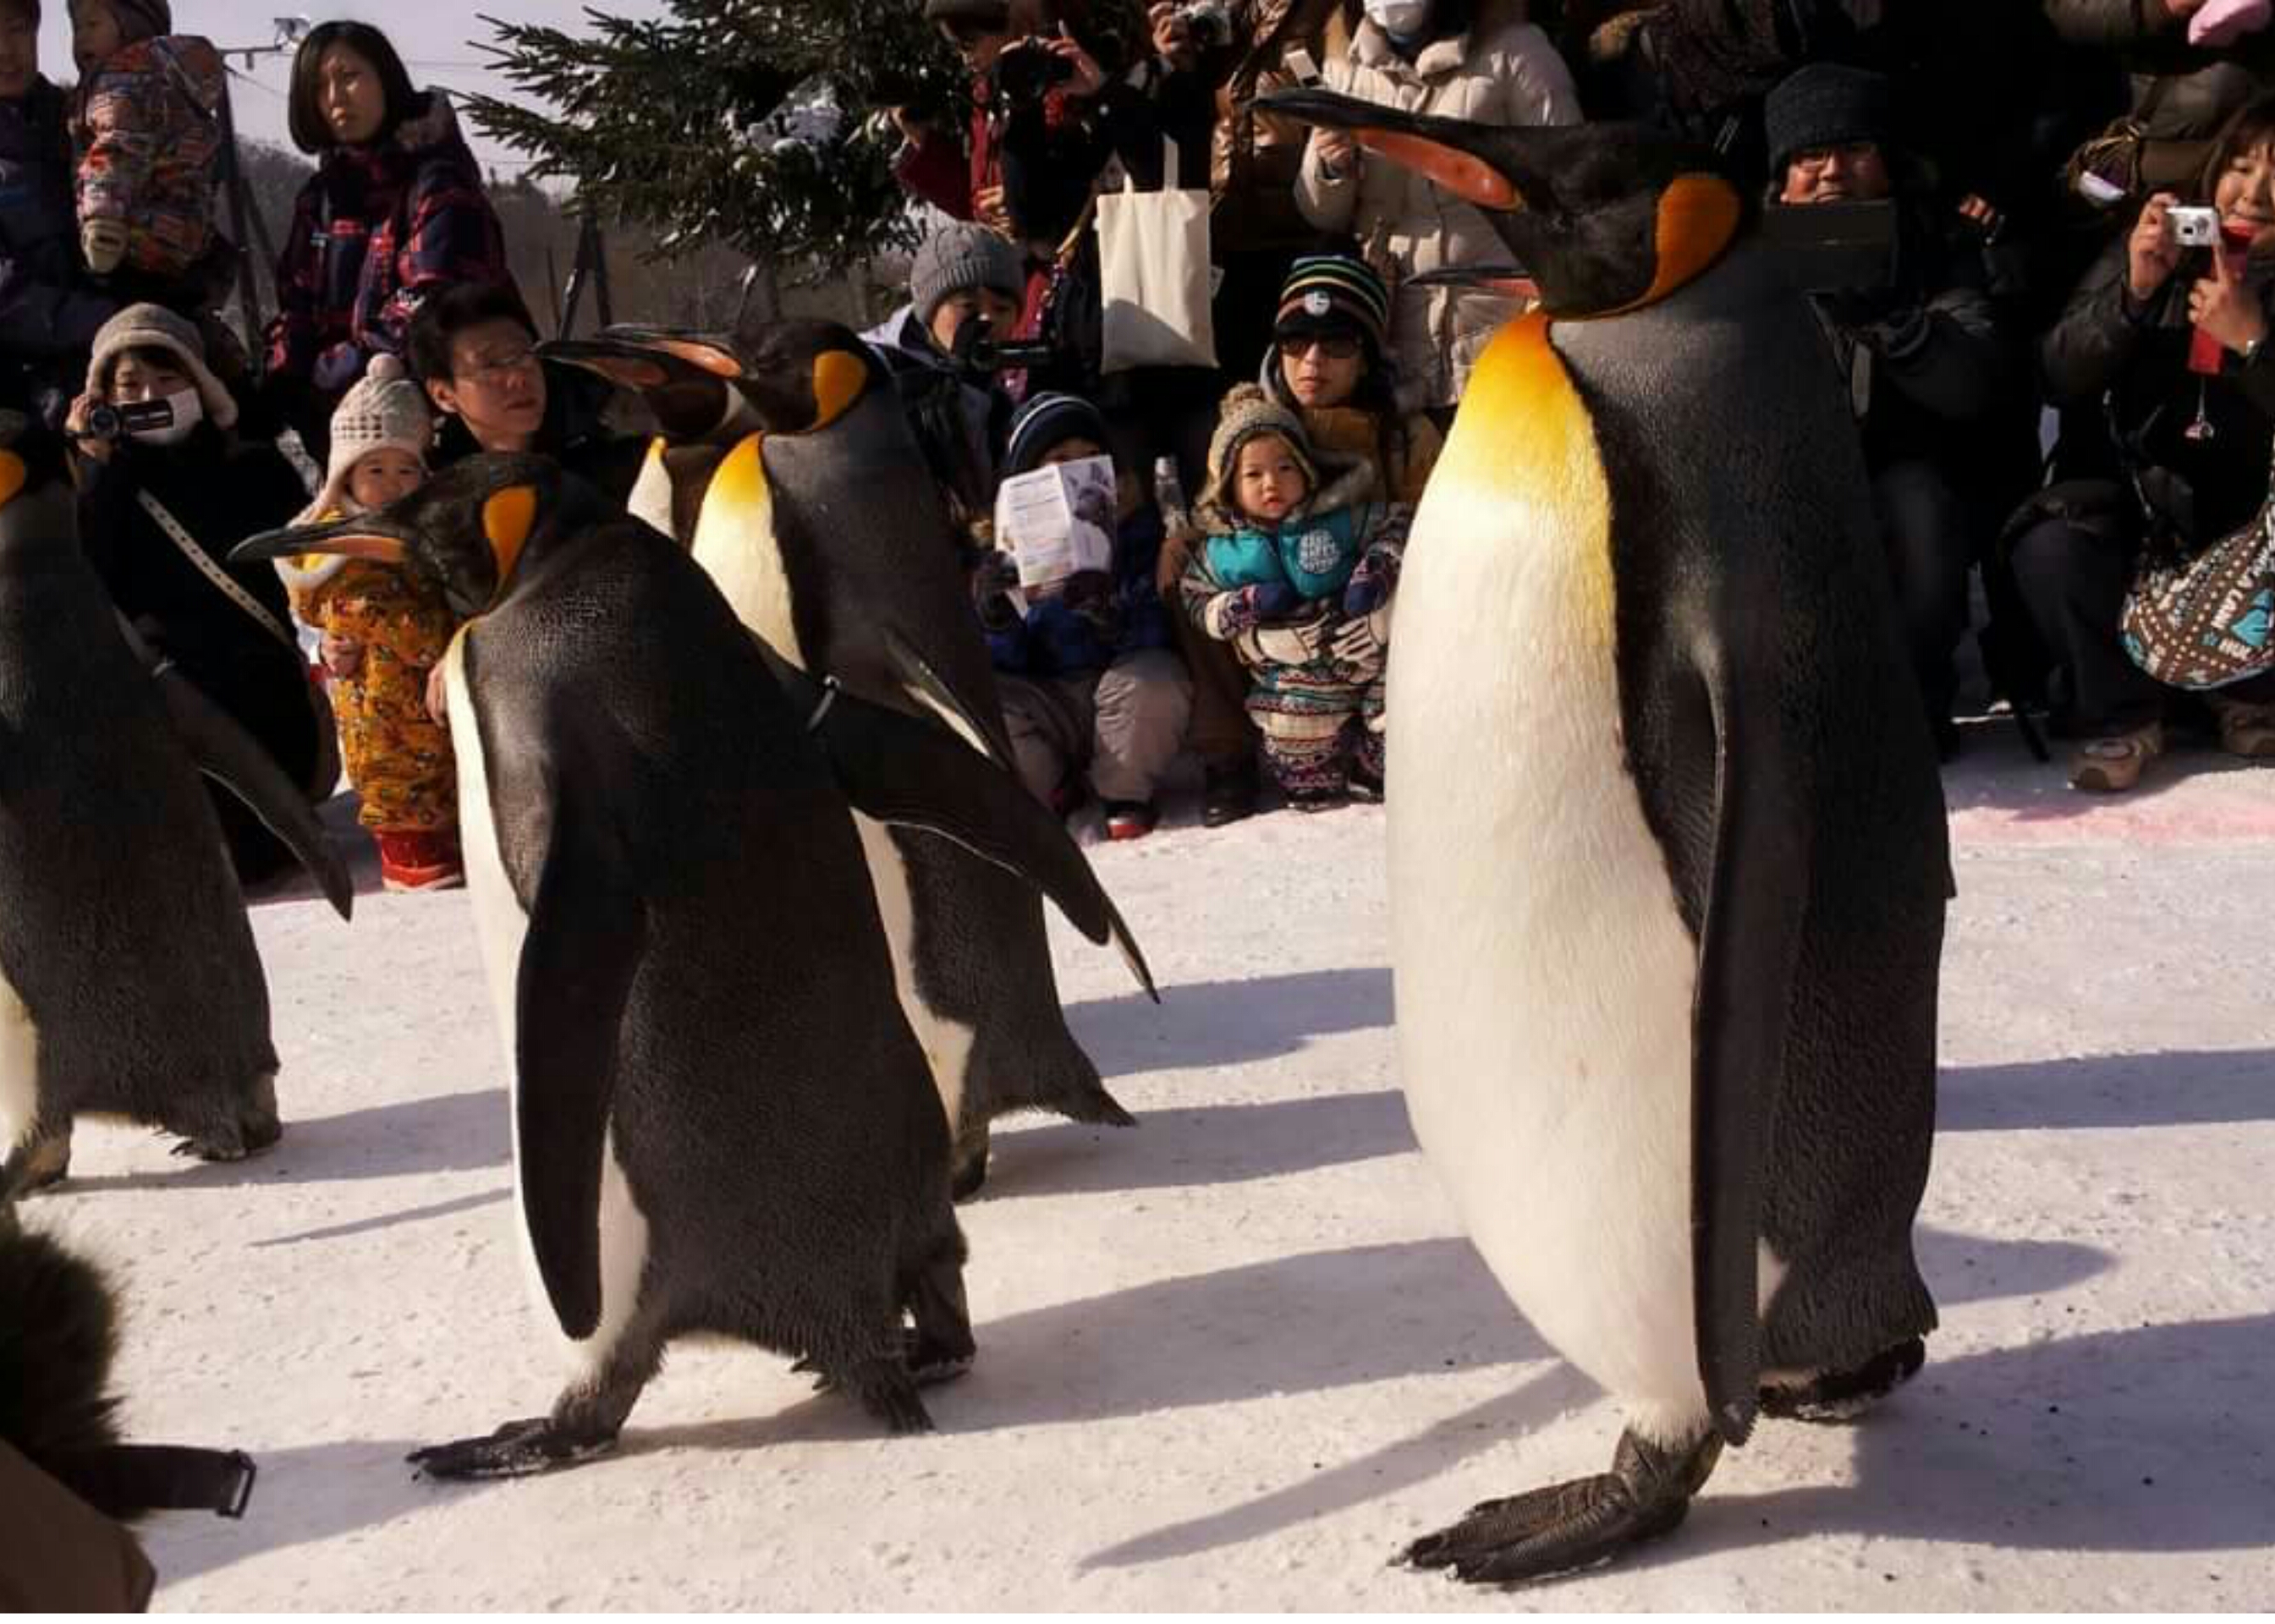 Plight of the Penguins: Should I Stay or Should I Go